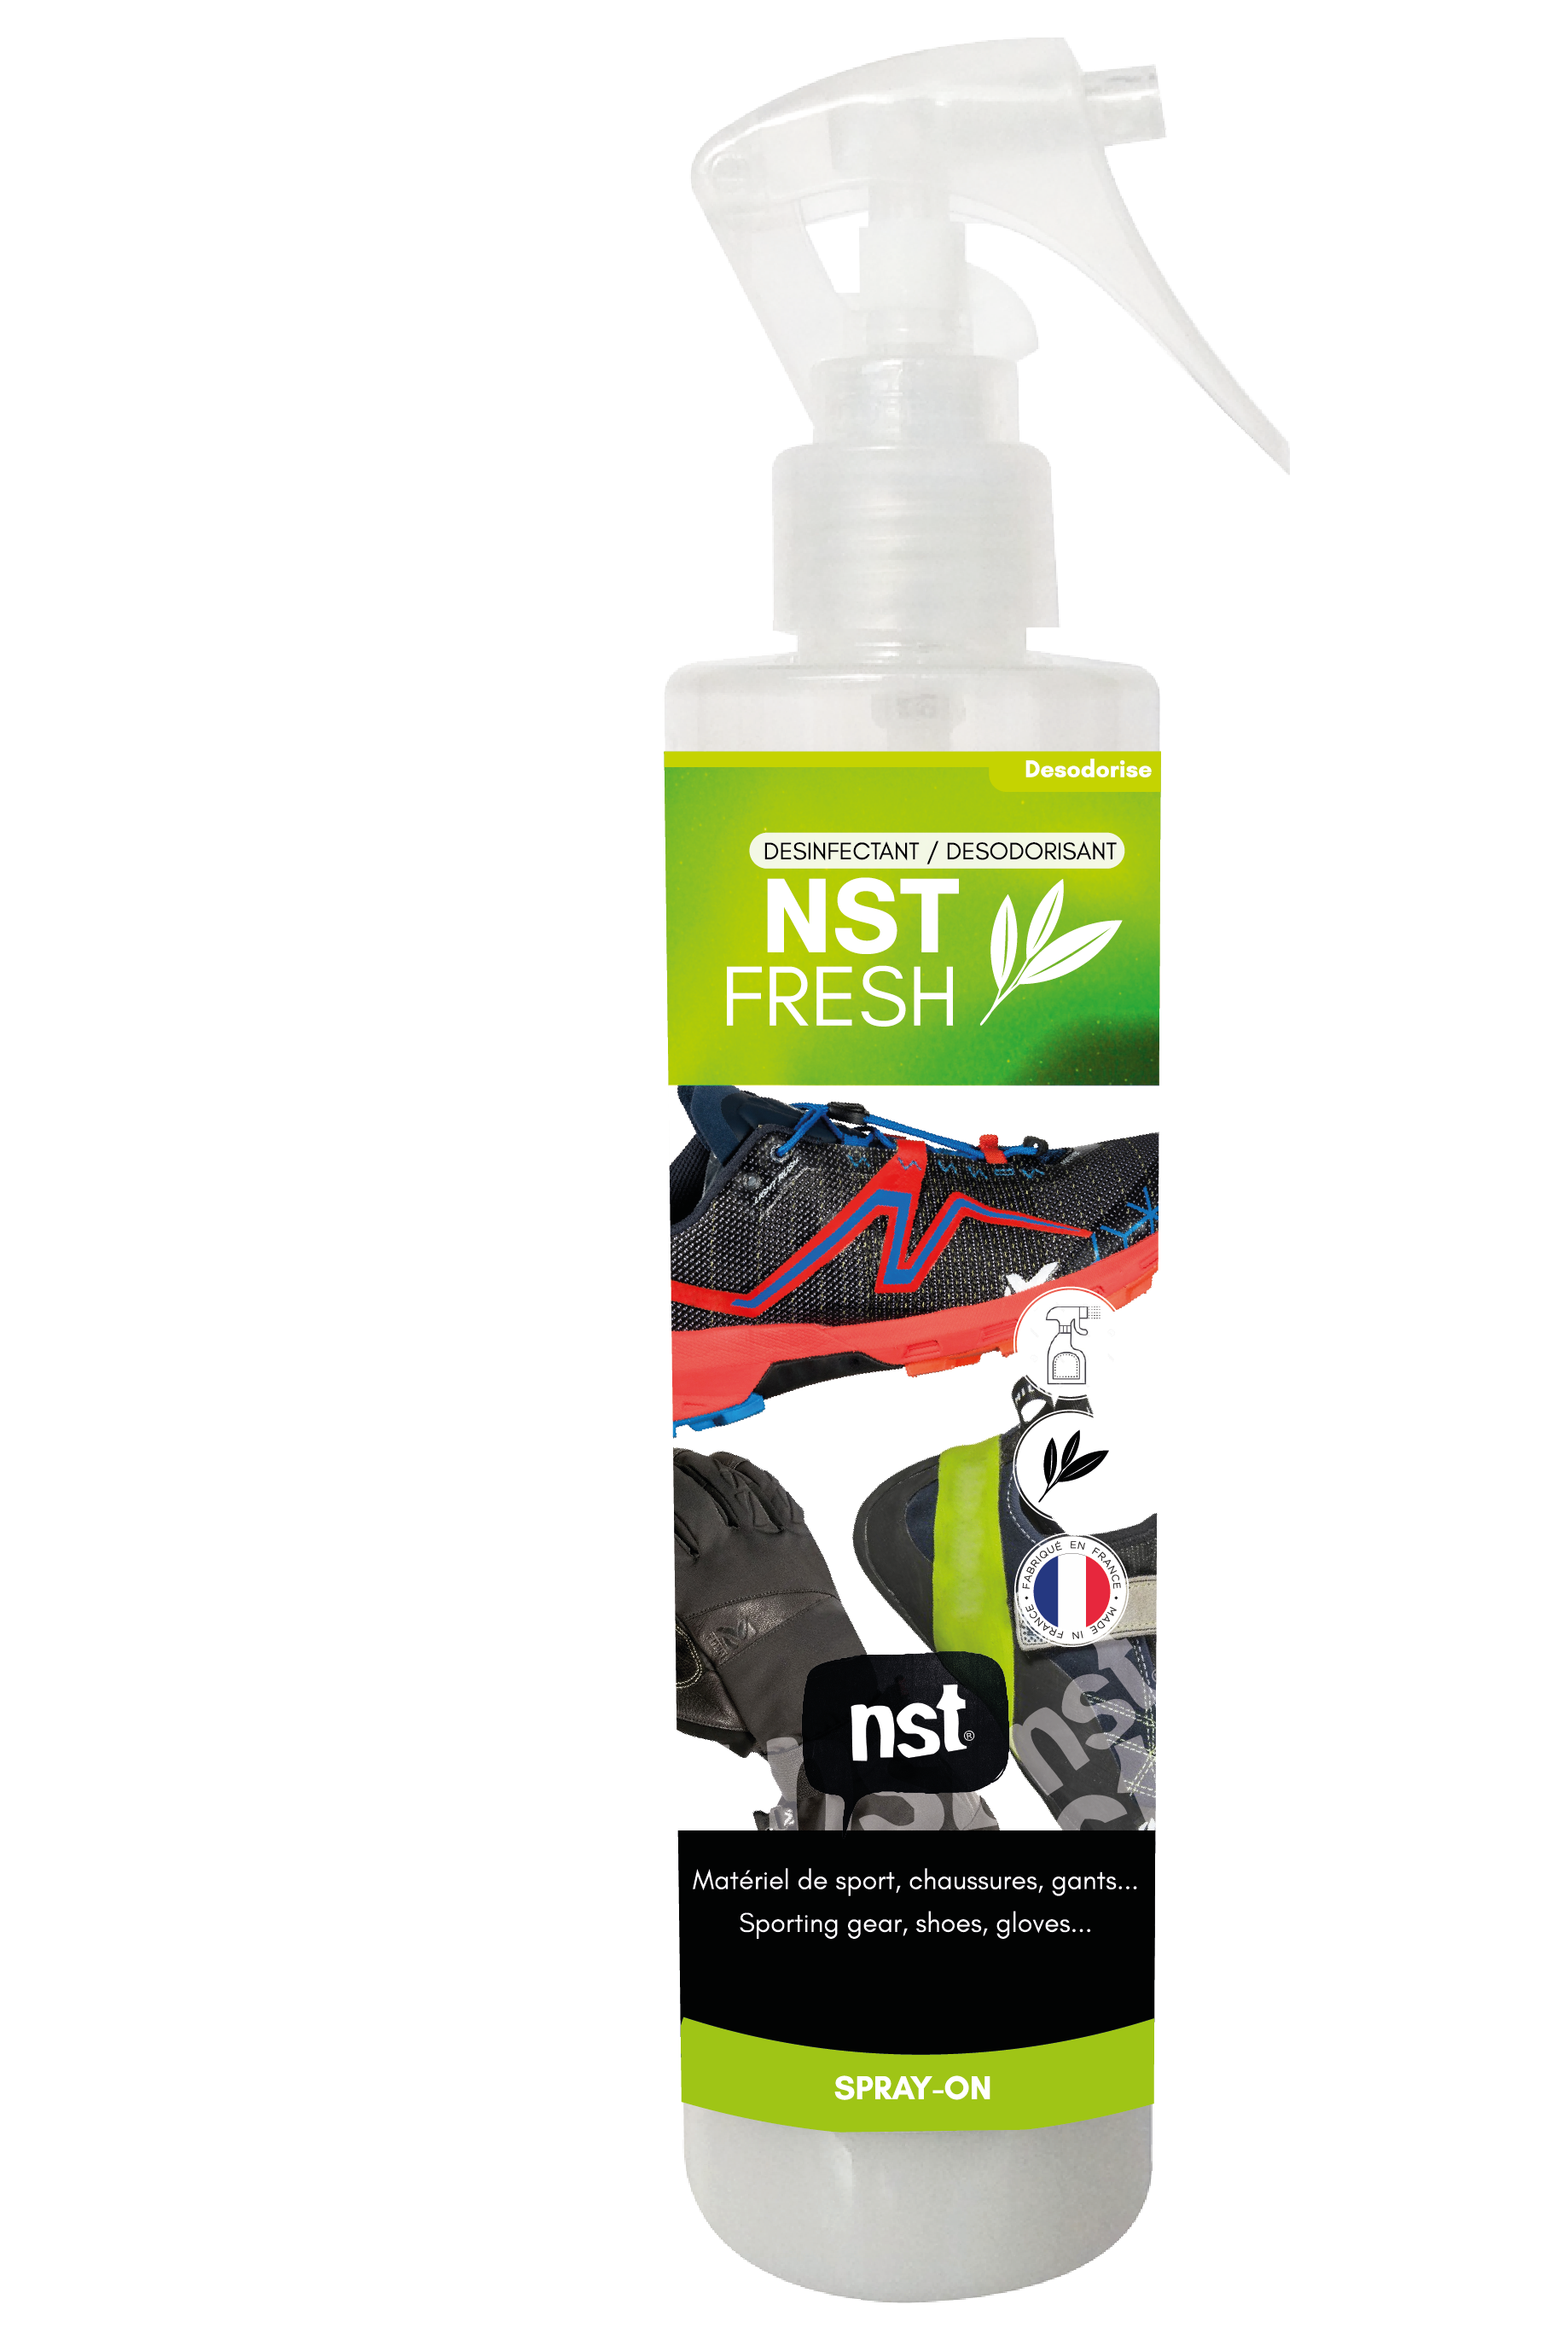 NST Fresh - Deodorising